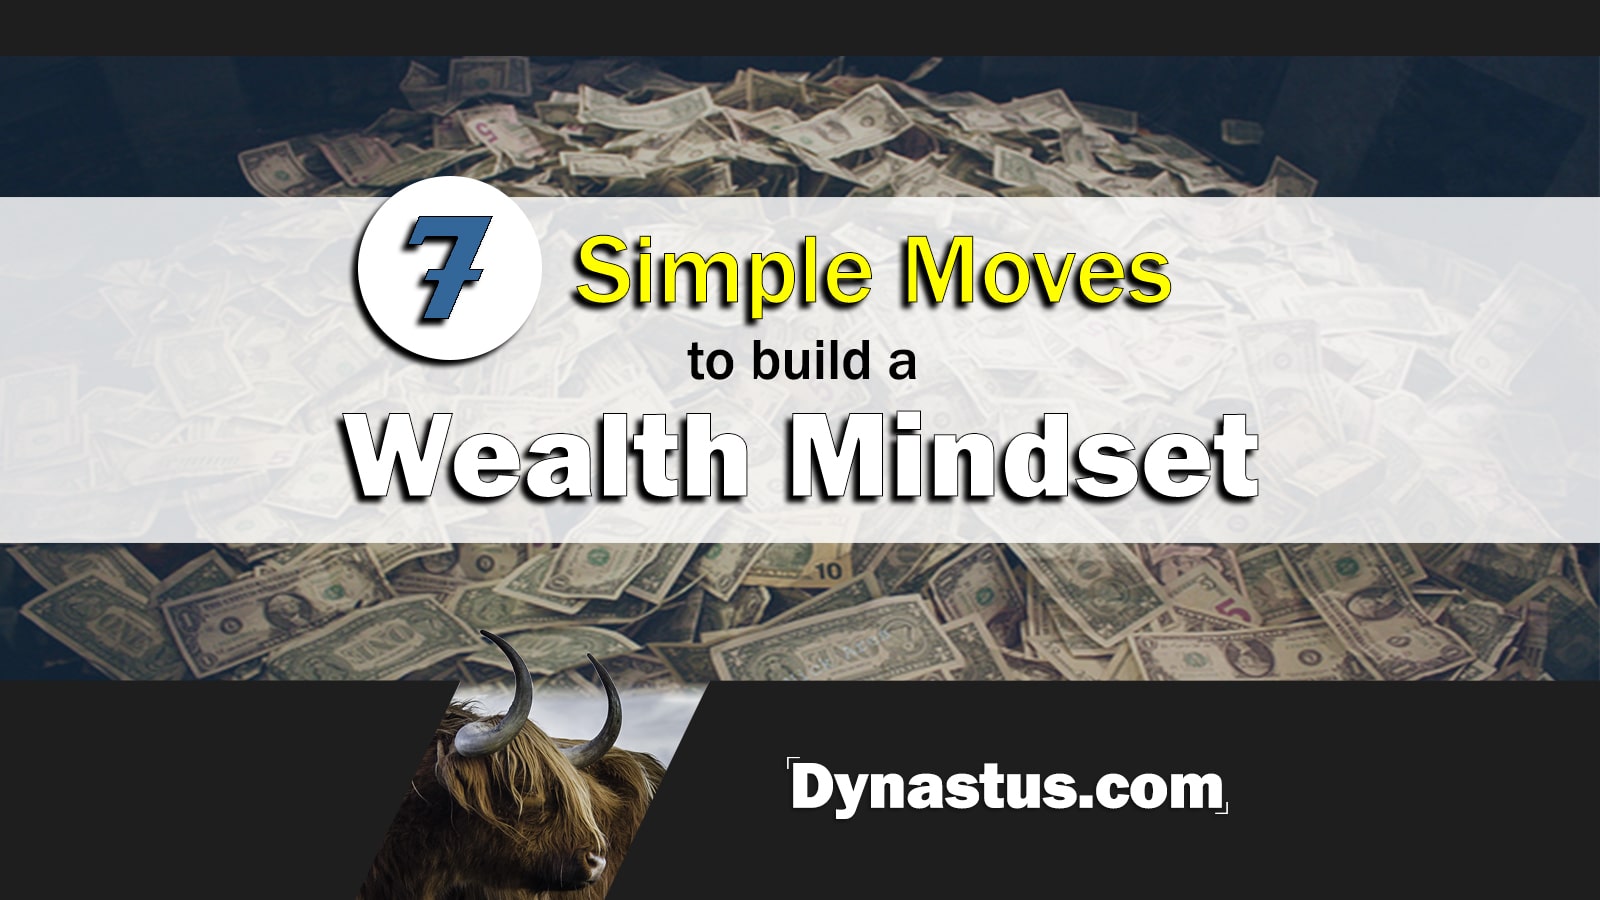 Dynastus 7 Simple Moves Toward A Wealth Mindset